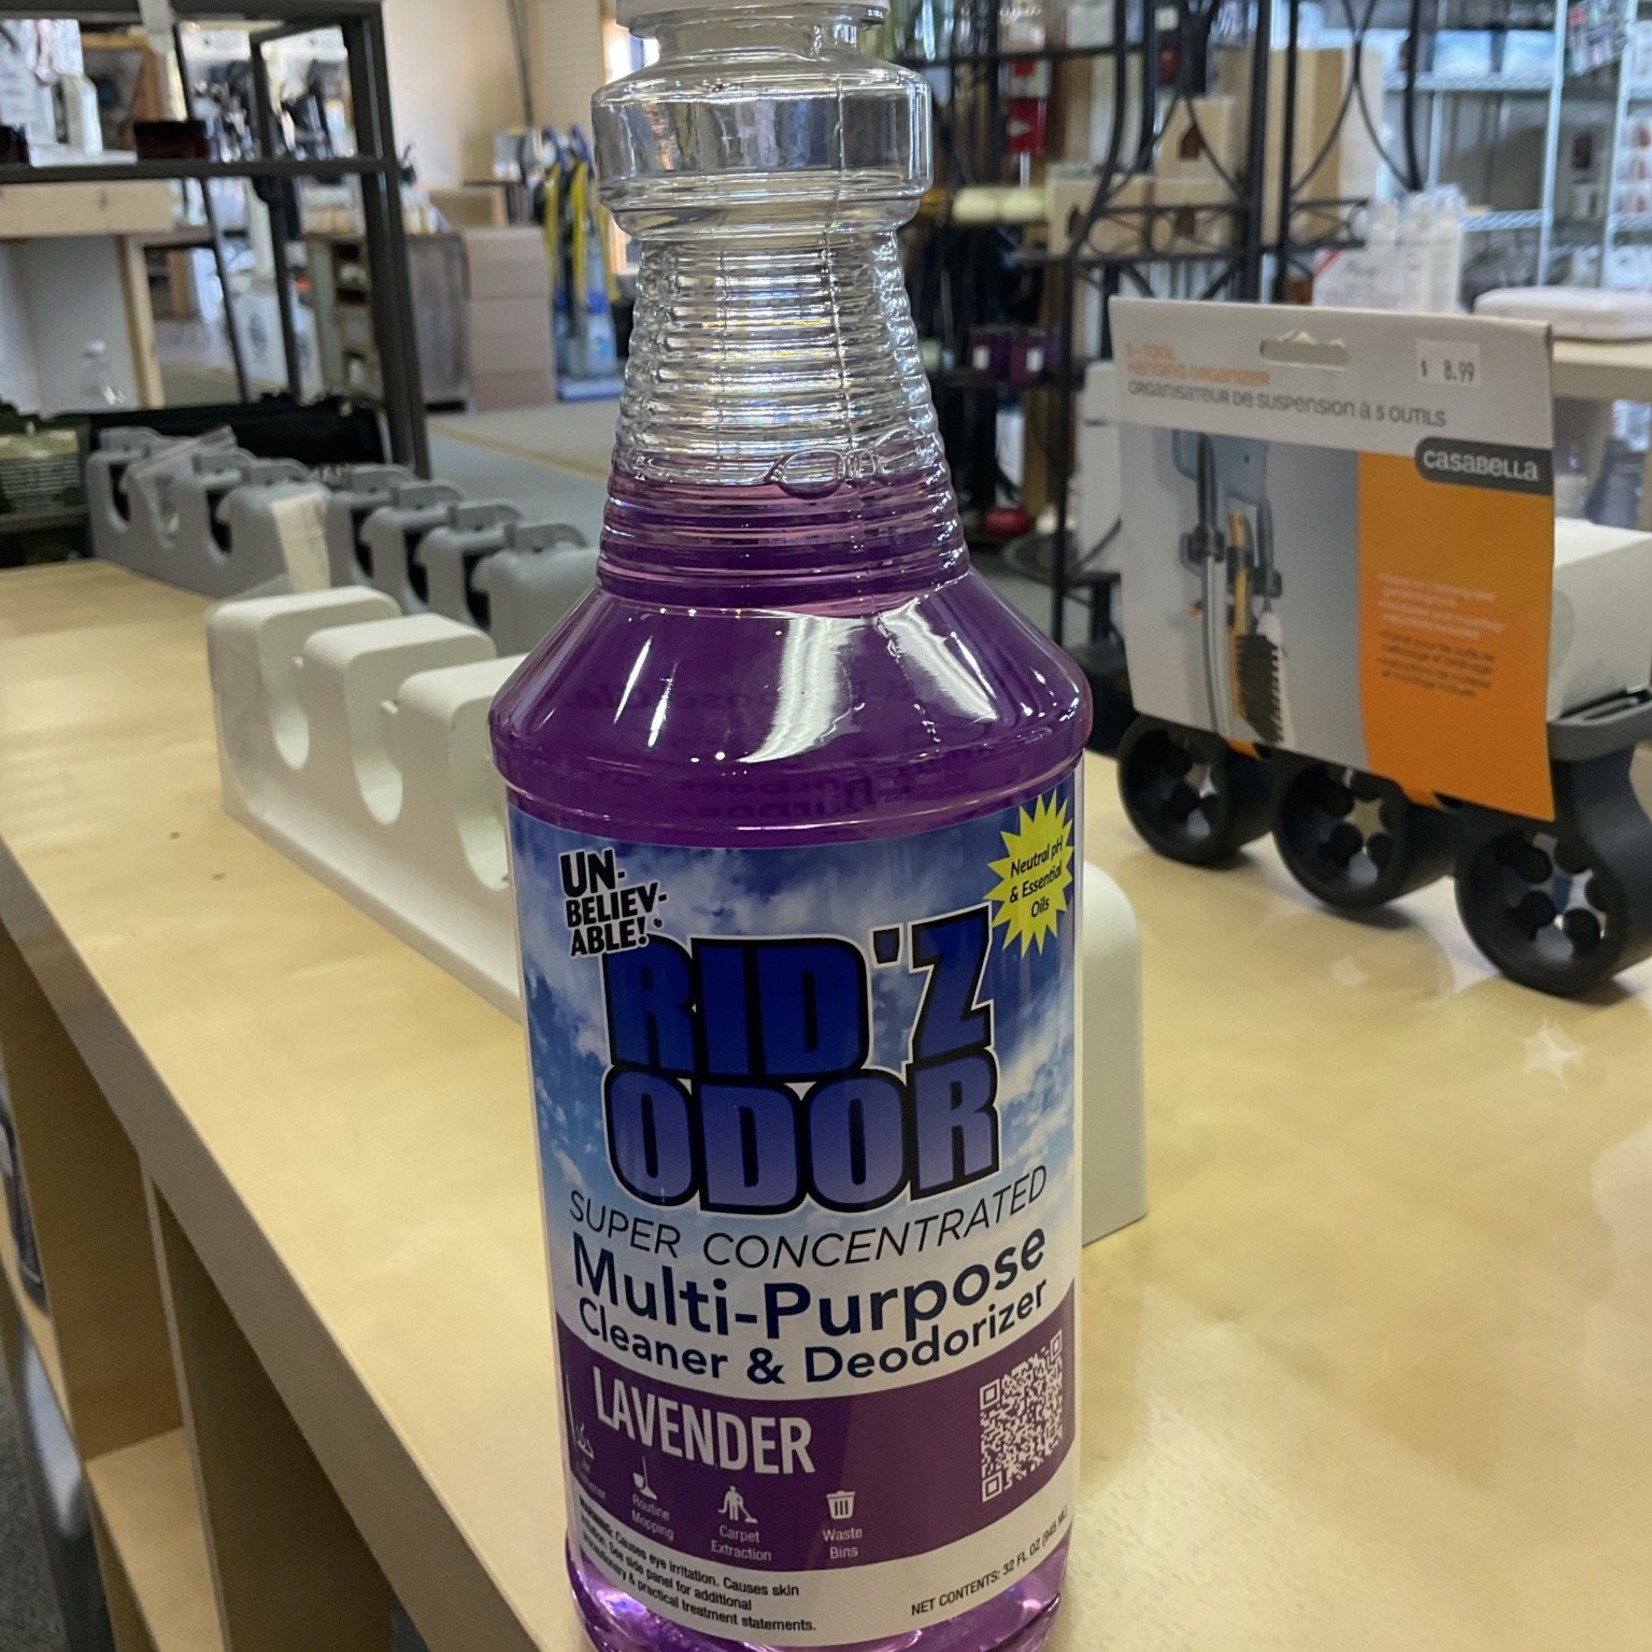 Rid’Z Odor Multi-Purpose Cleaner & Deodorizer Lavender